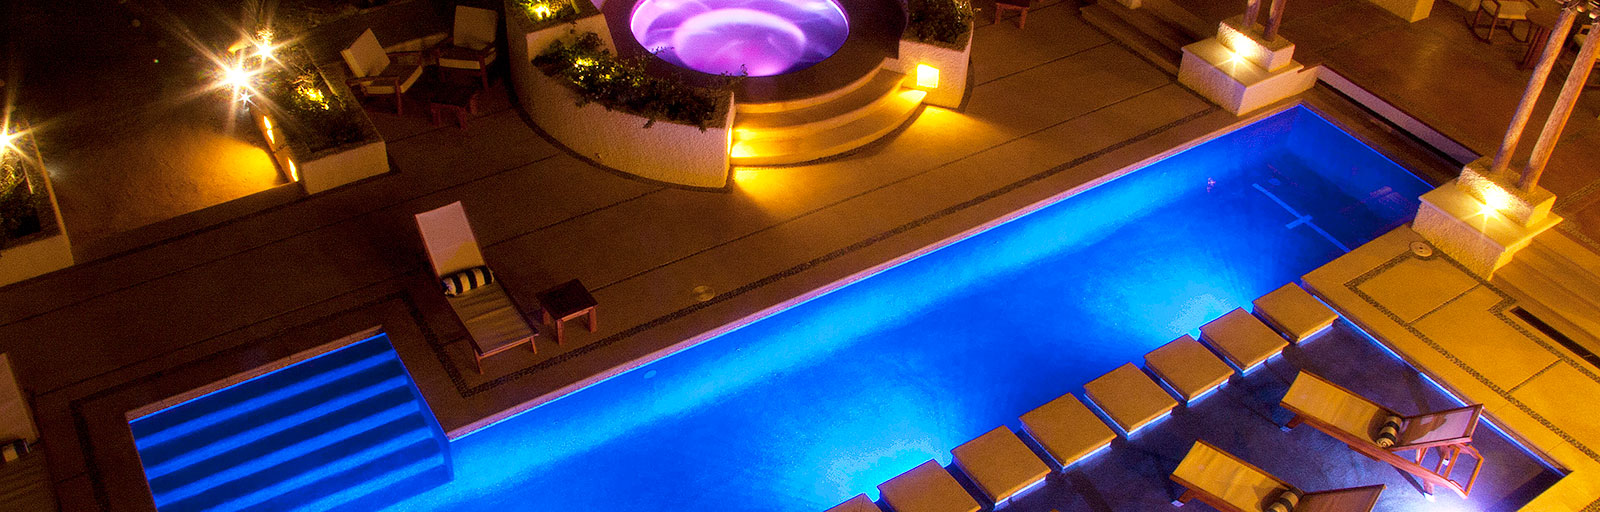 Spa & Yoga Retreat in Mexico: Swimming Pool & Hot Tub at Night